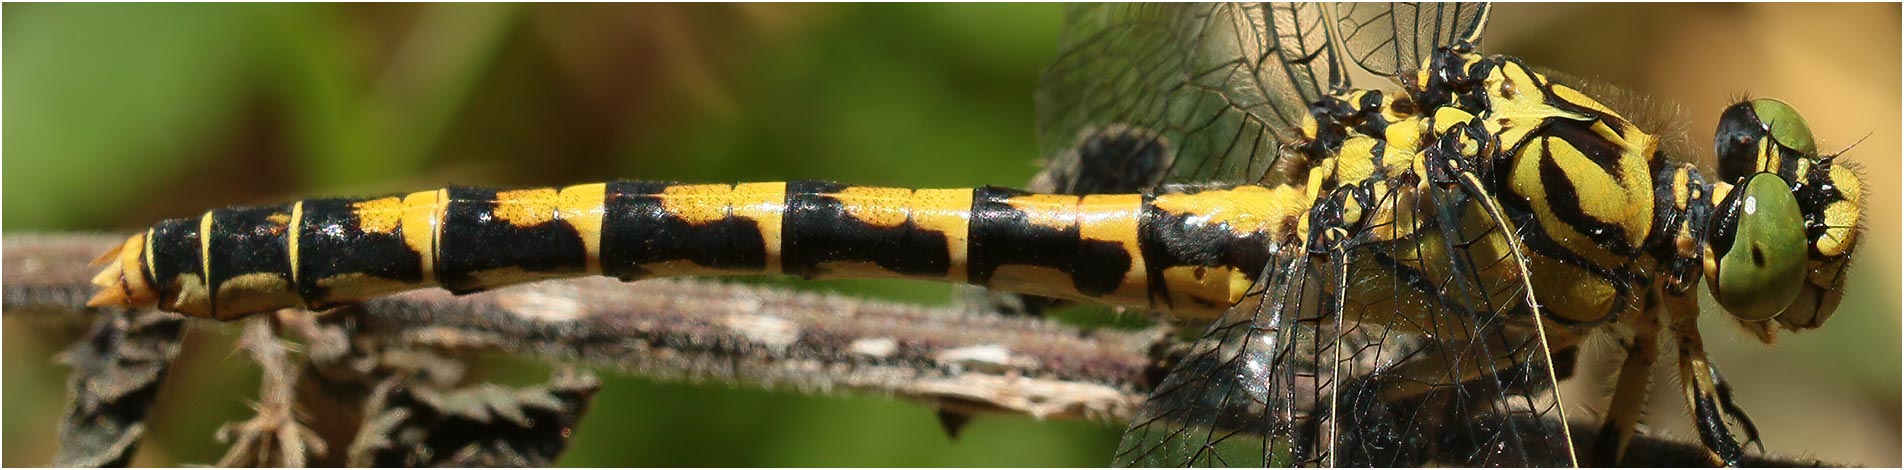 Onychogomphus forcipatus femelle, Portet sur Garonne (France-31), 19/07/2019